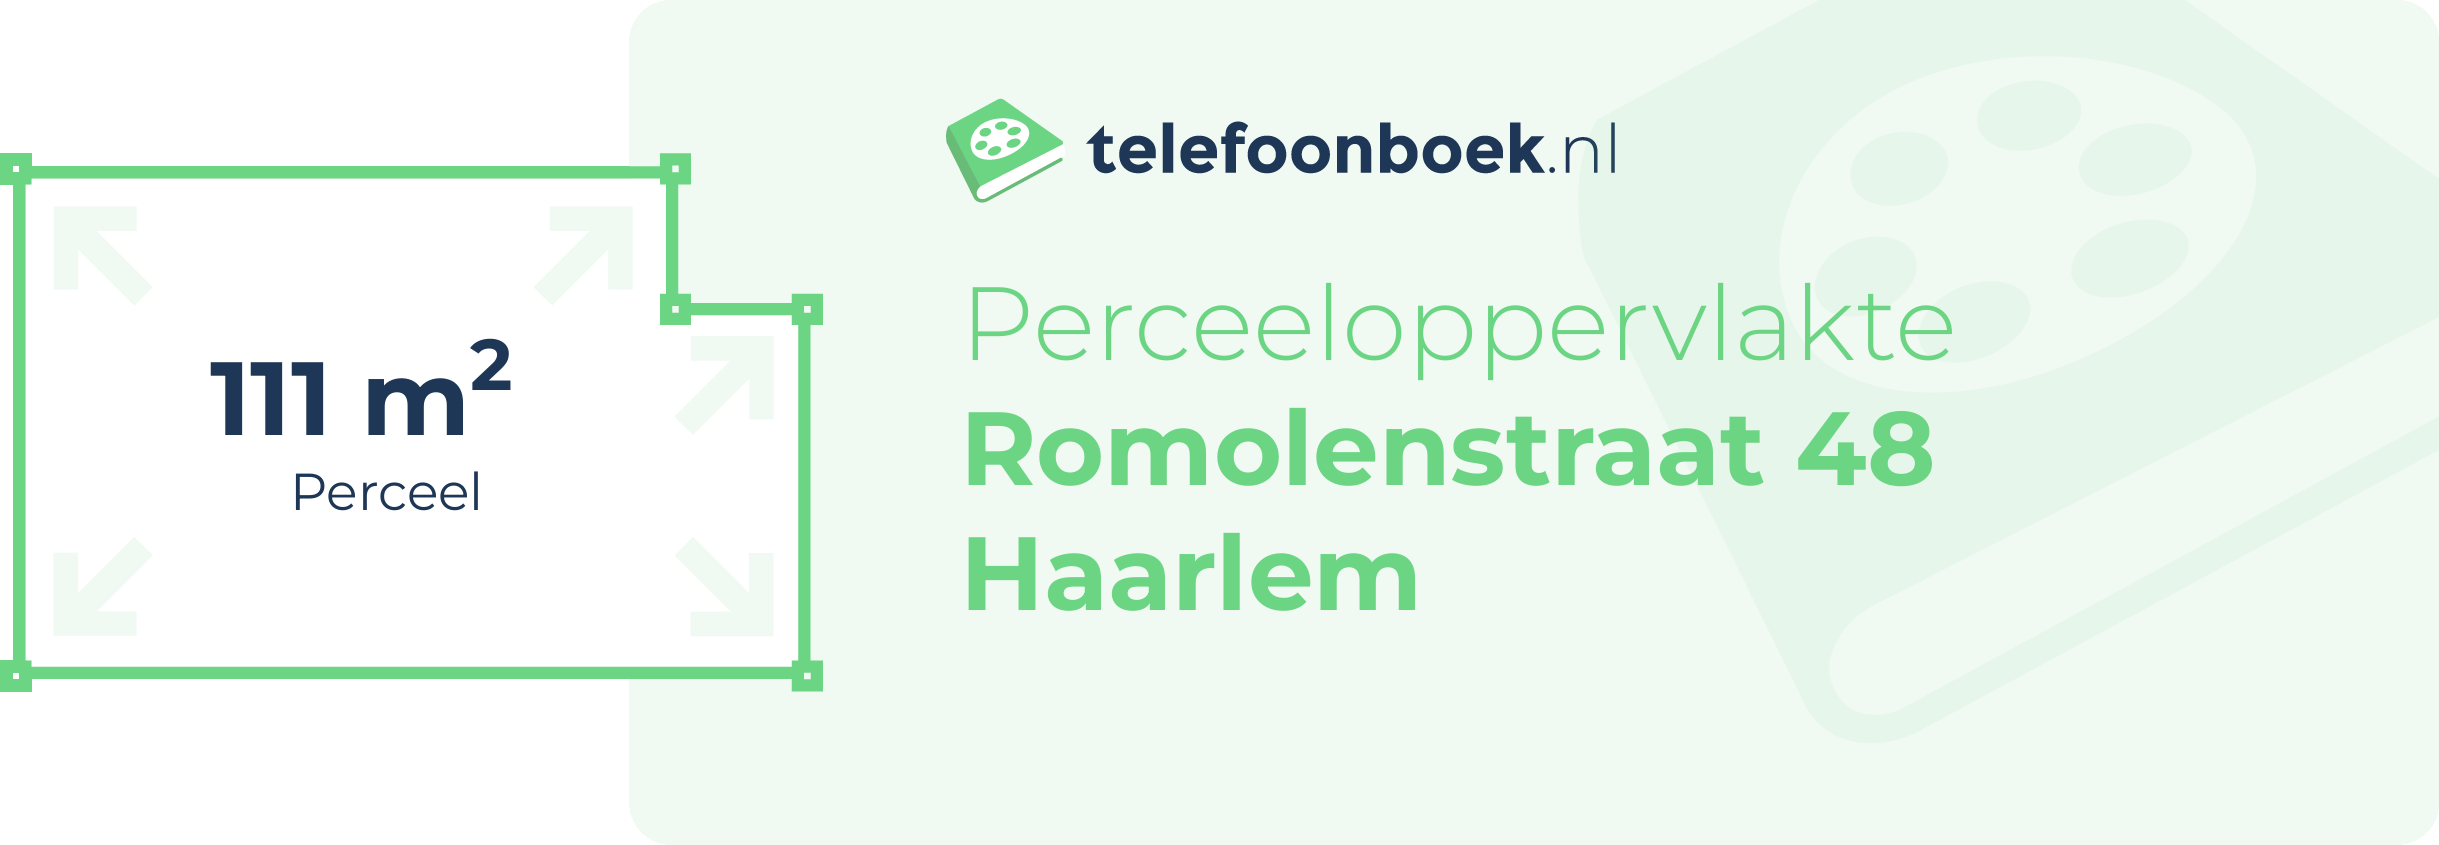 Perceeloppervlakte Romolenstraat 48 Haarlem